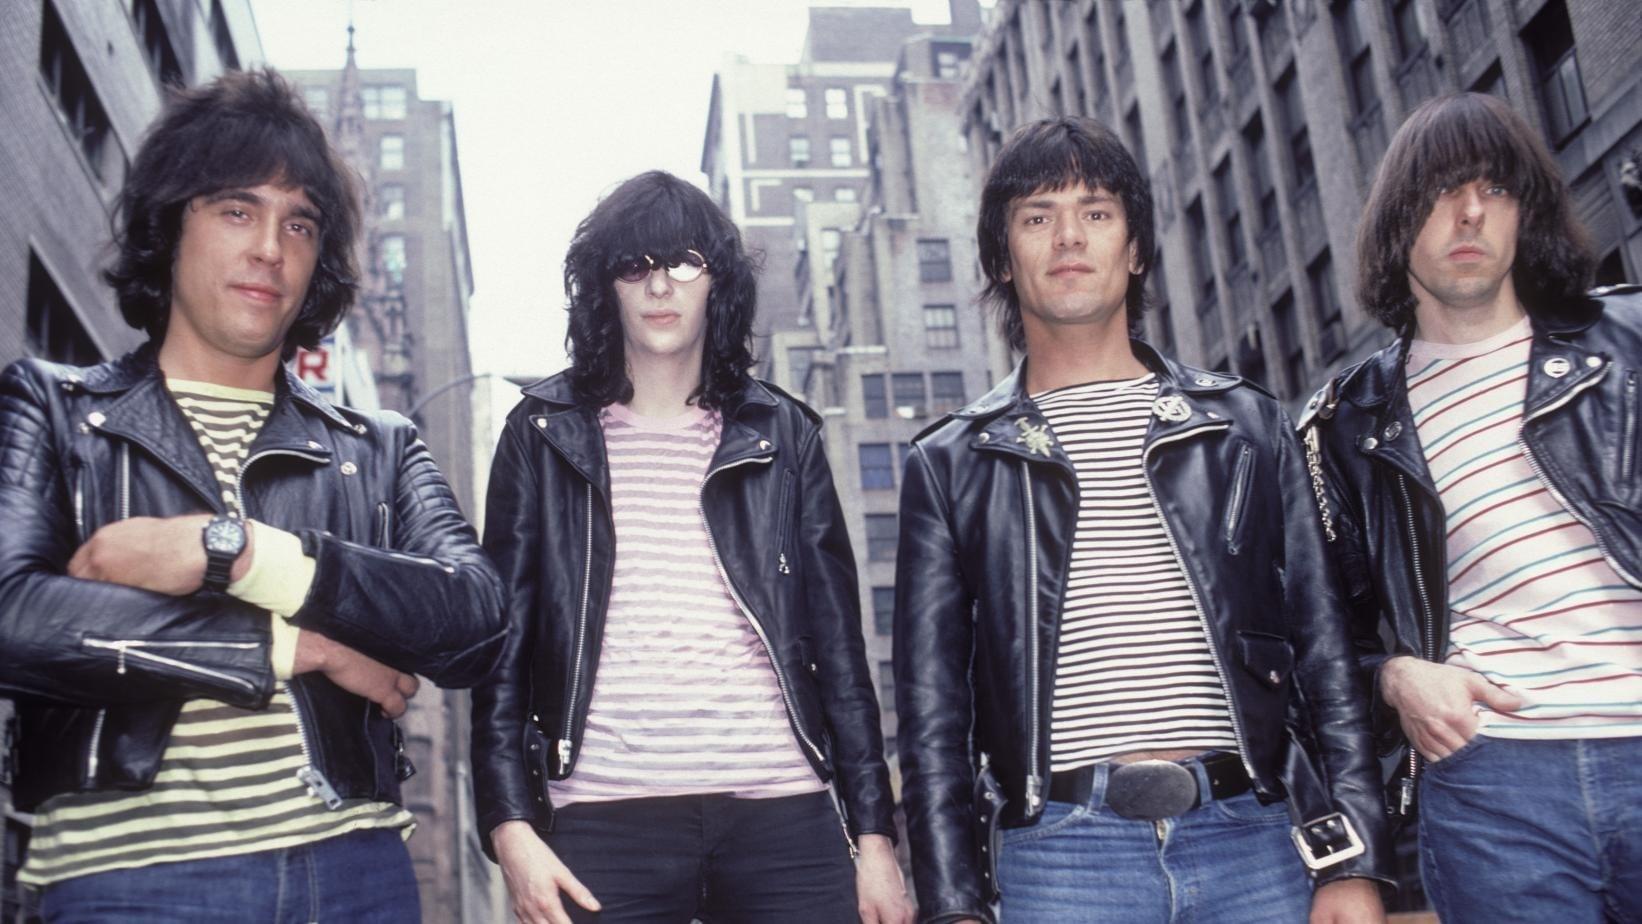 Ramones: Raw backdrop